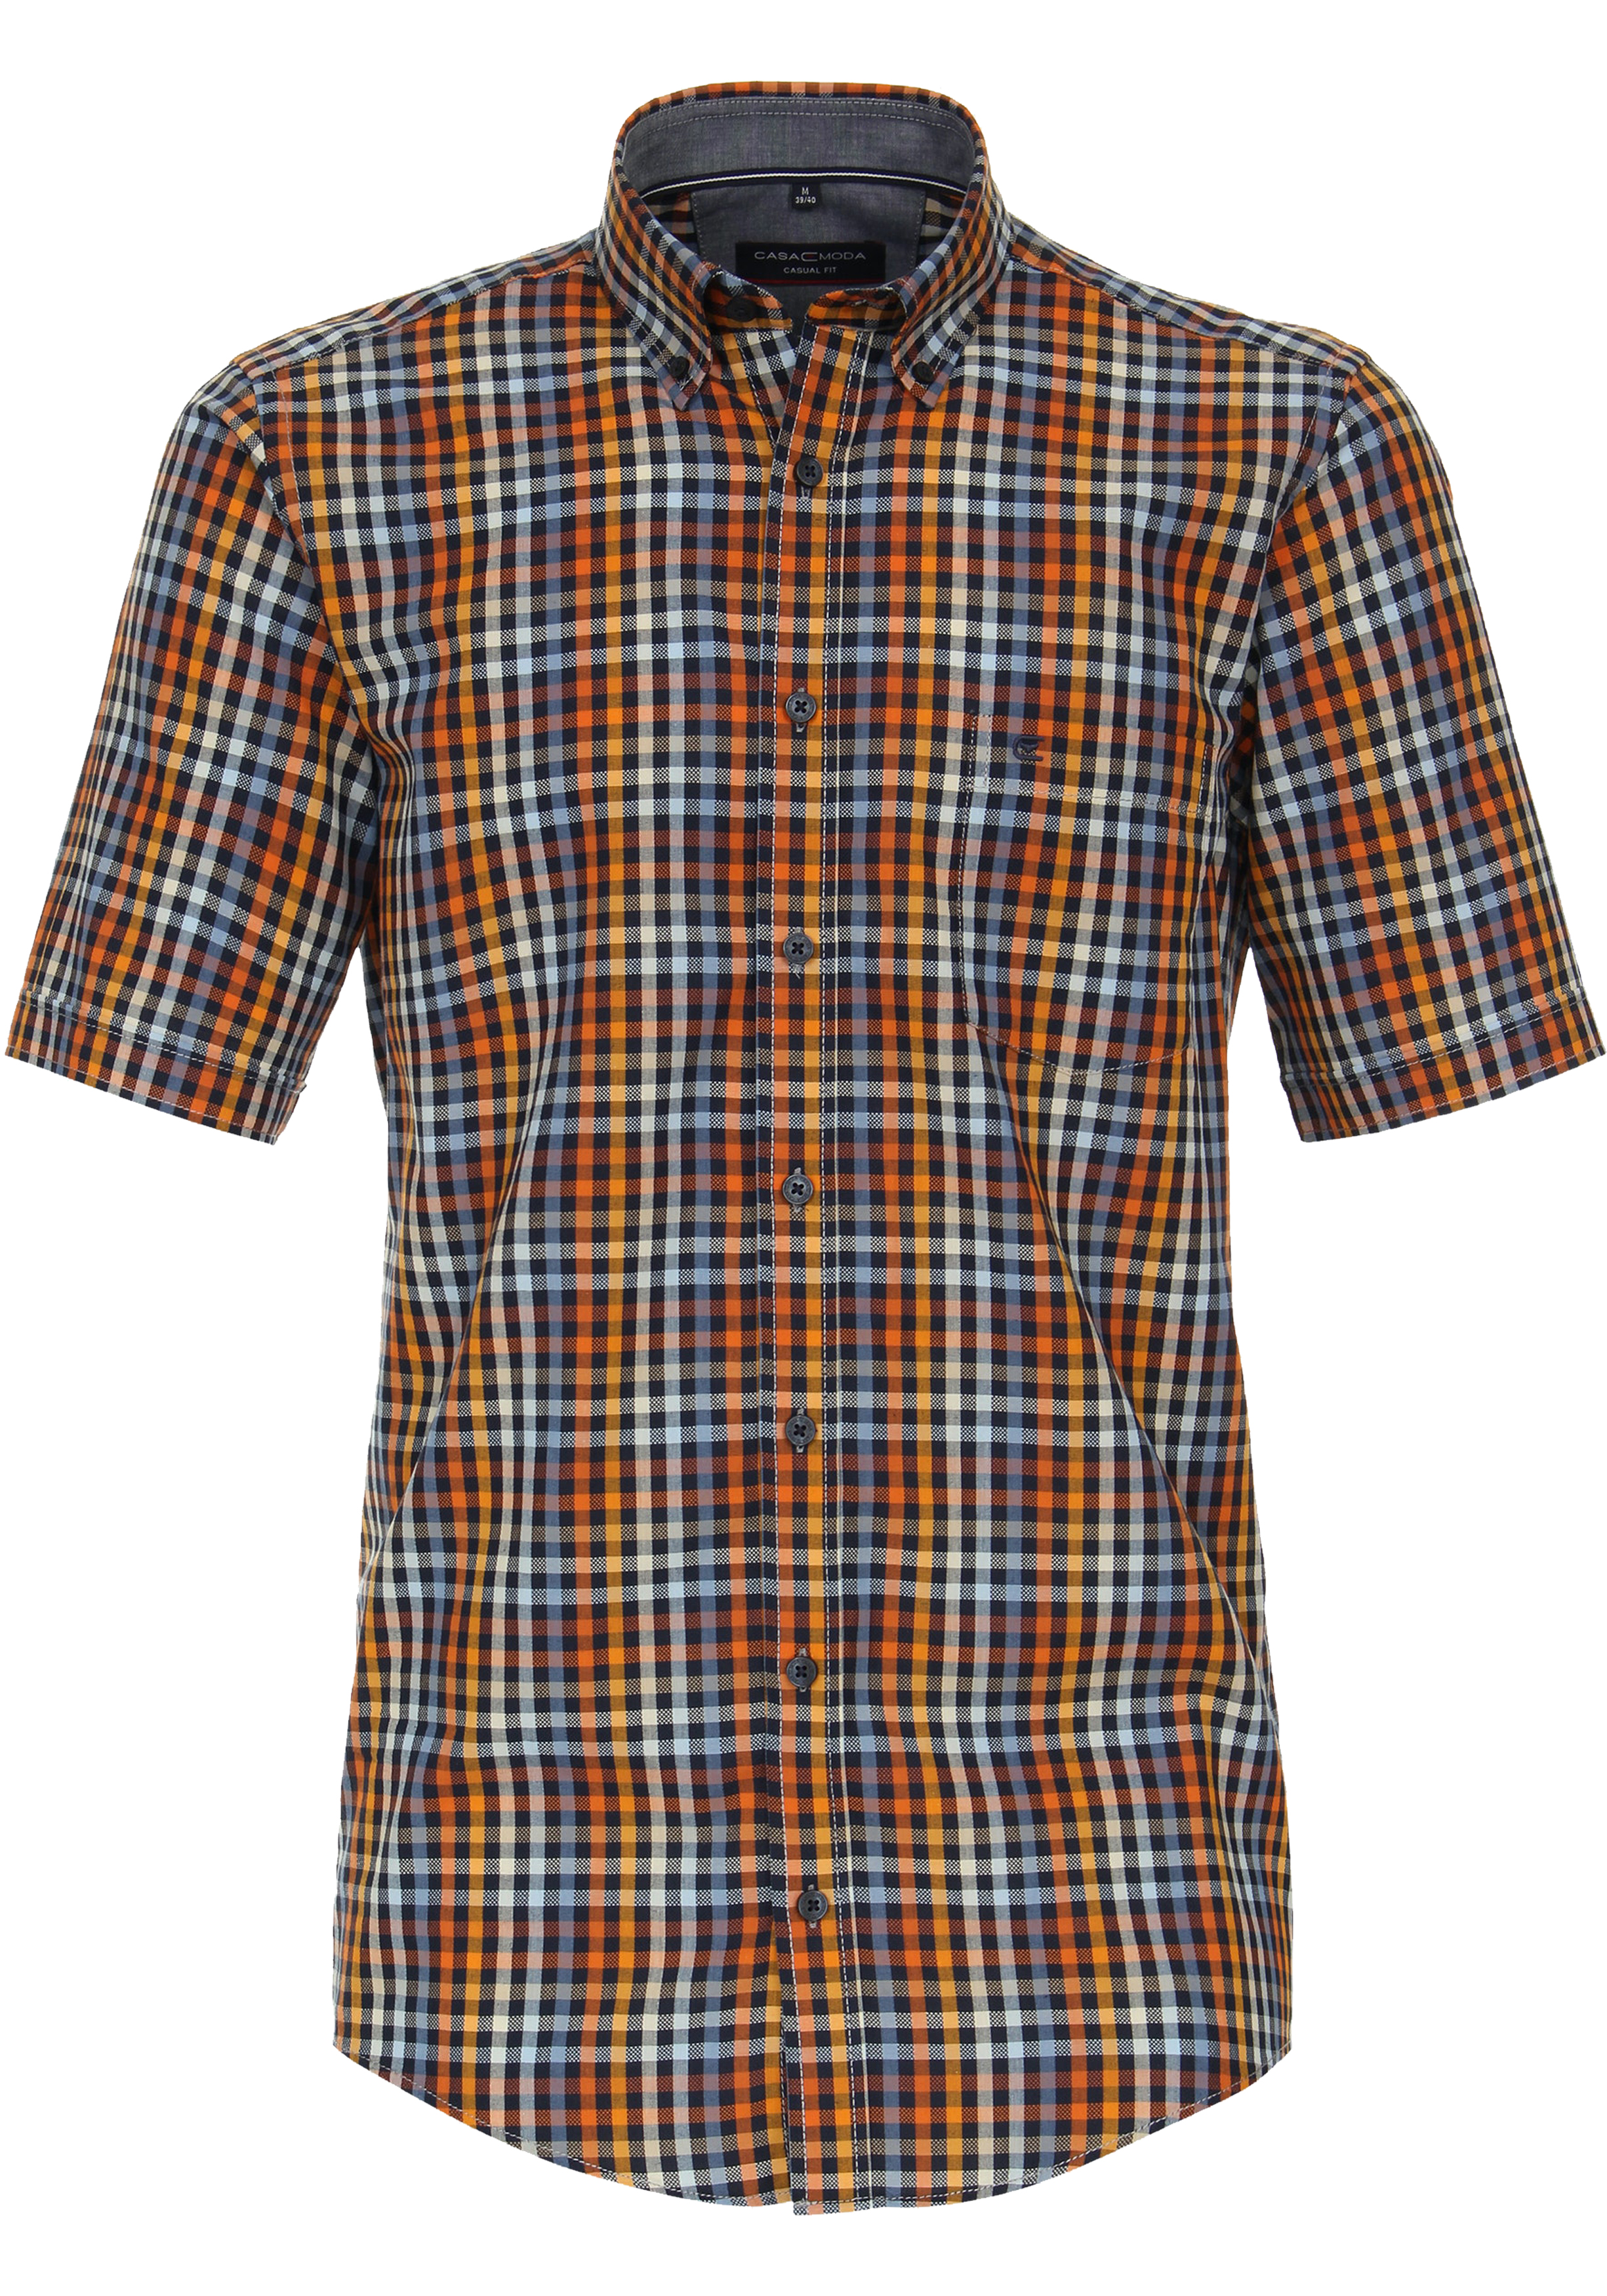 CASA MODA Sport casual fit overhemd, korte mouw, dobby, oranje geruit